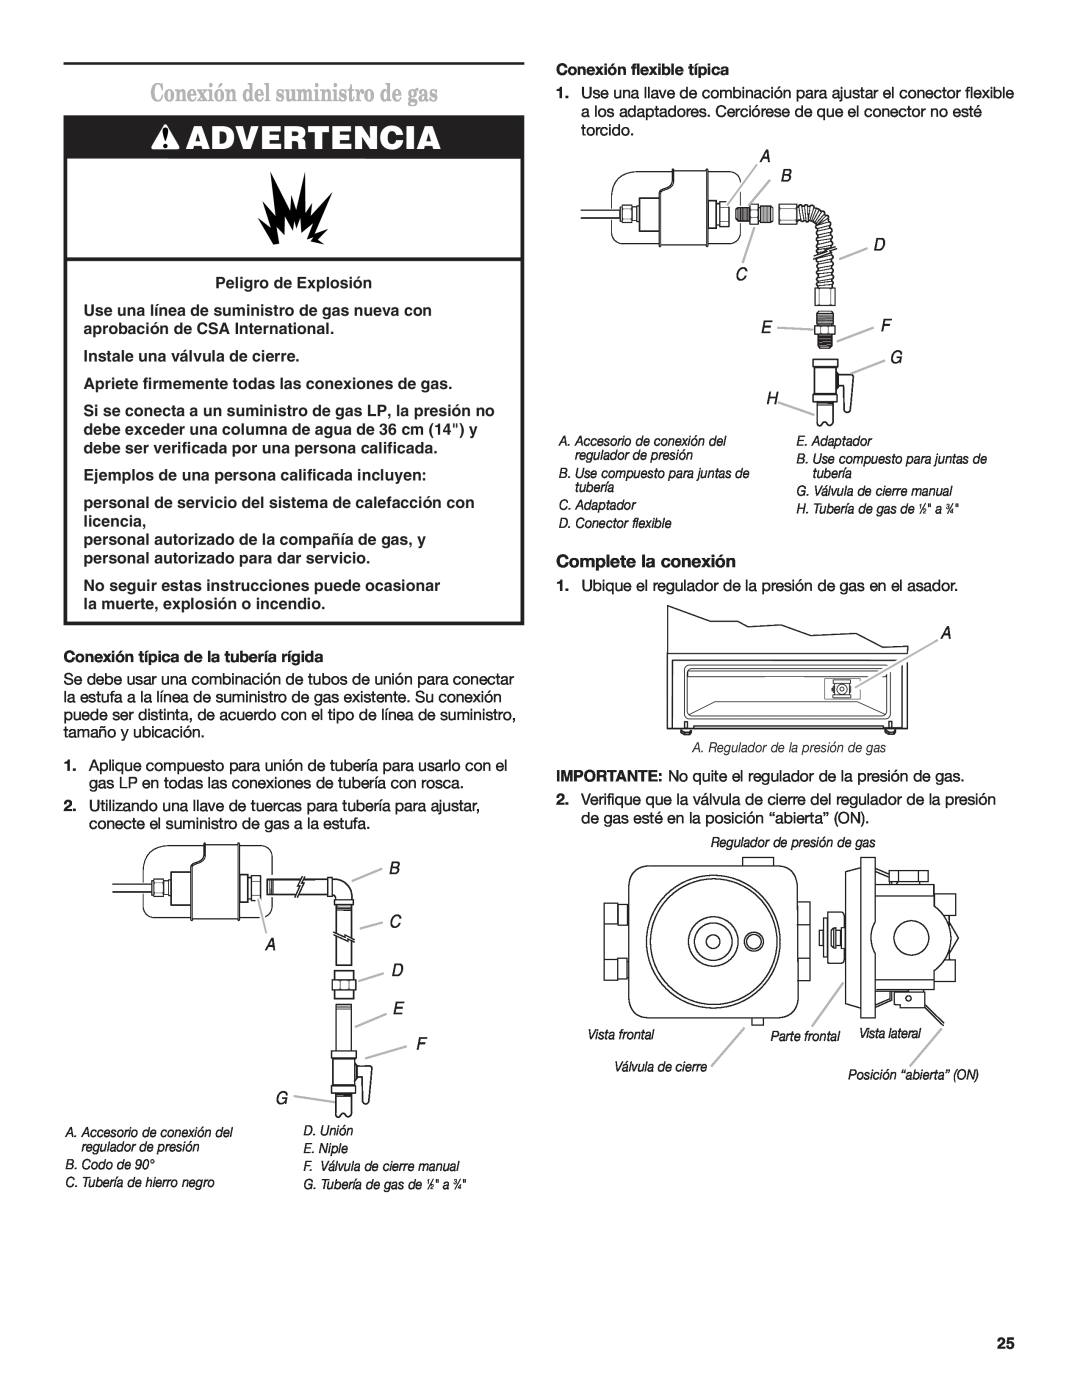 Amana AGG222VDW installation instructions Conexión del suministro de gas, Advertencia, Complete la conexión, B C A D E F 